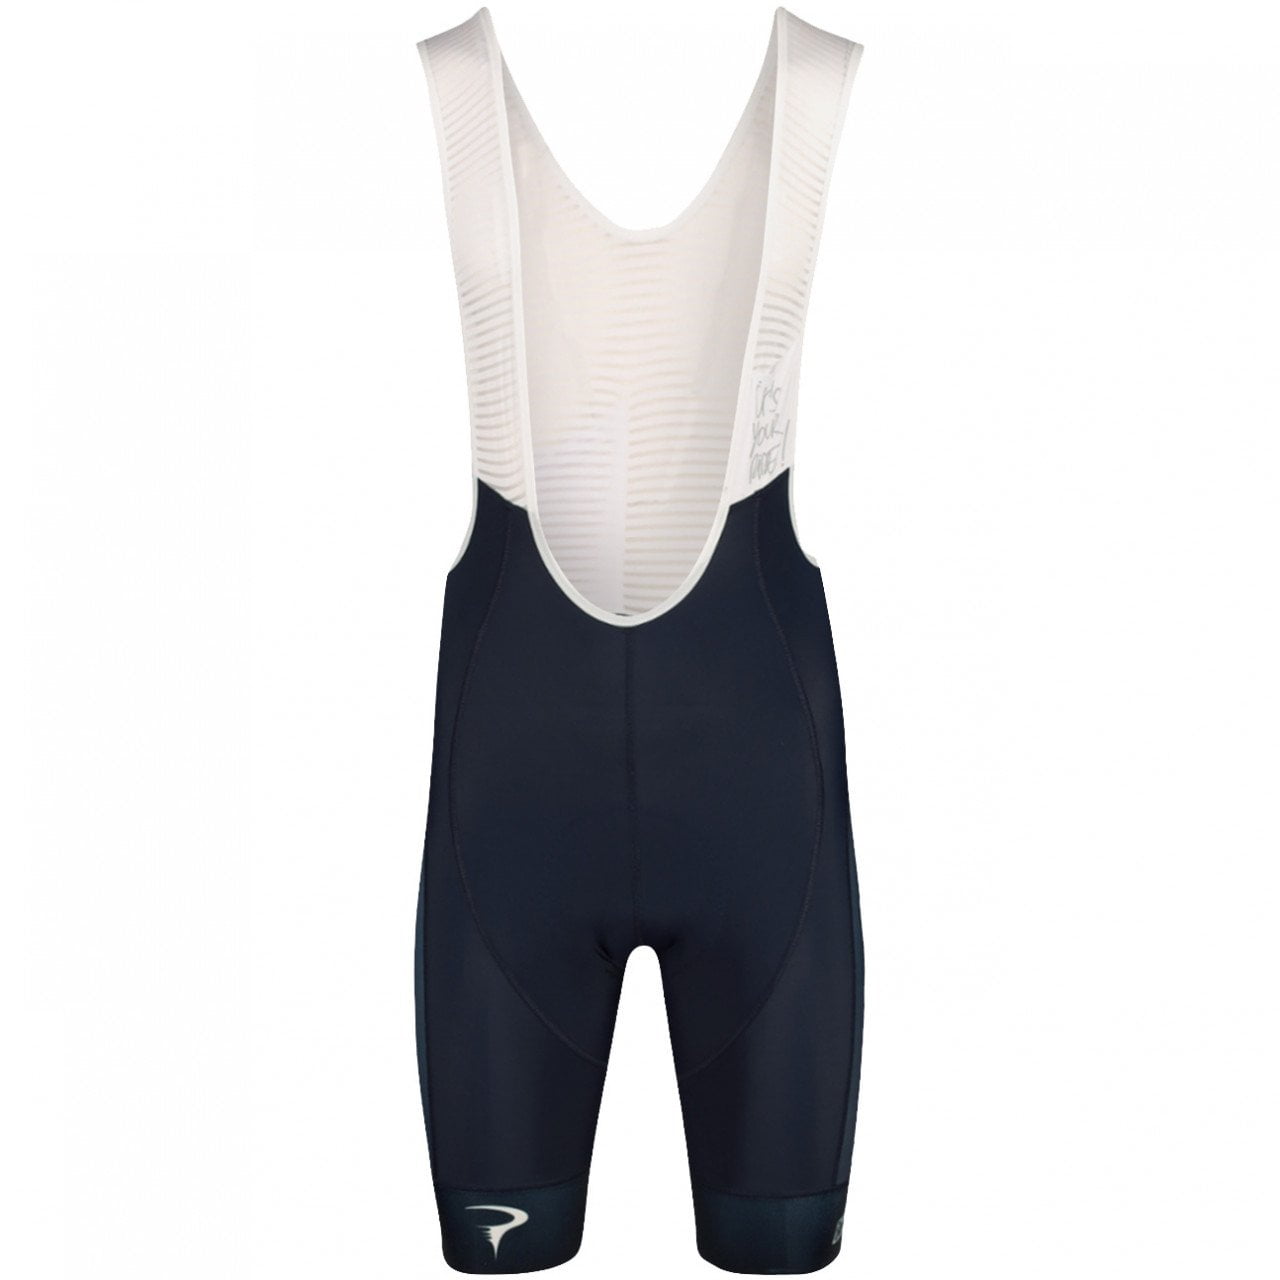 Men's Short Sleeve Cycling Jersey (Bib) Shorts Ineos-2022-004-AC